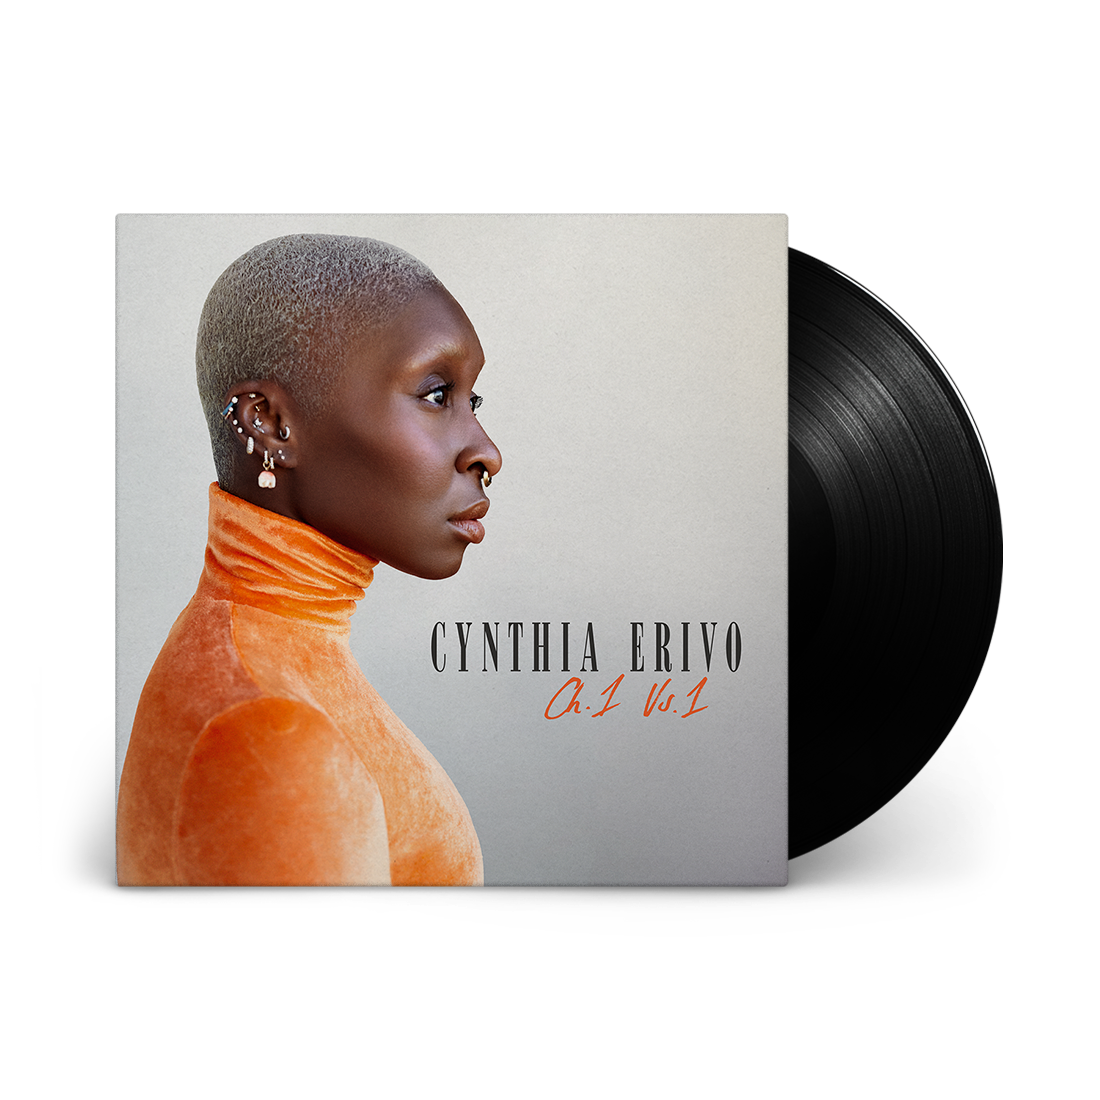 Cynthia Erivo - Ch.1 Vs.1: Vinyl LP